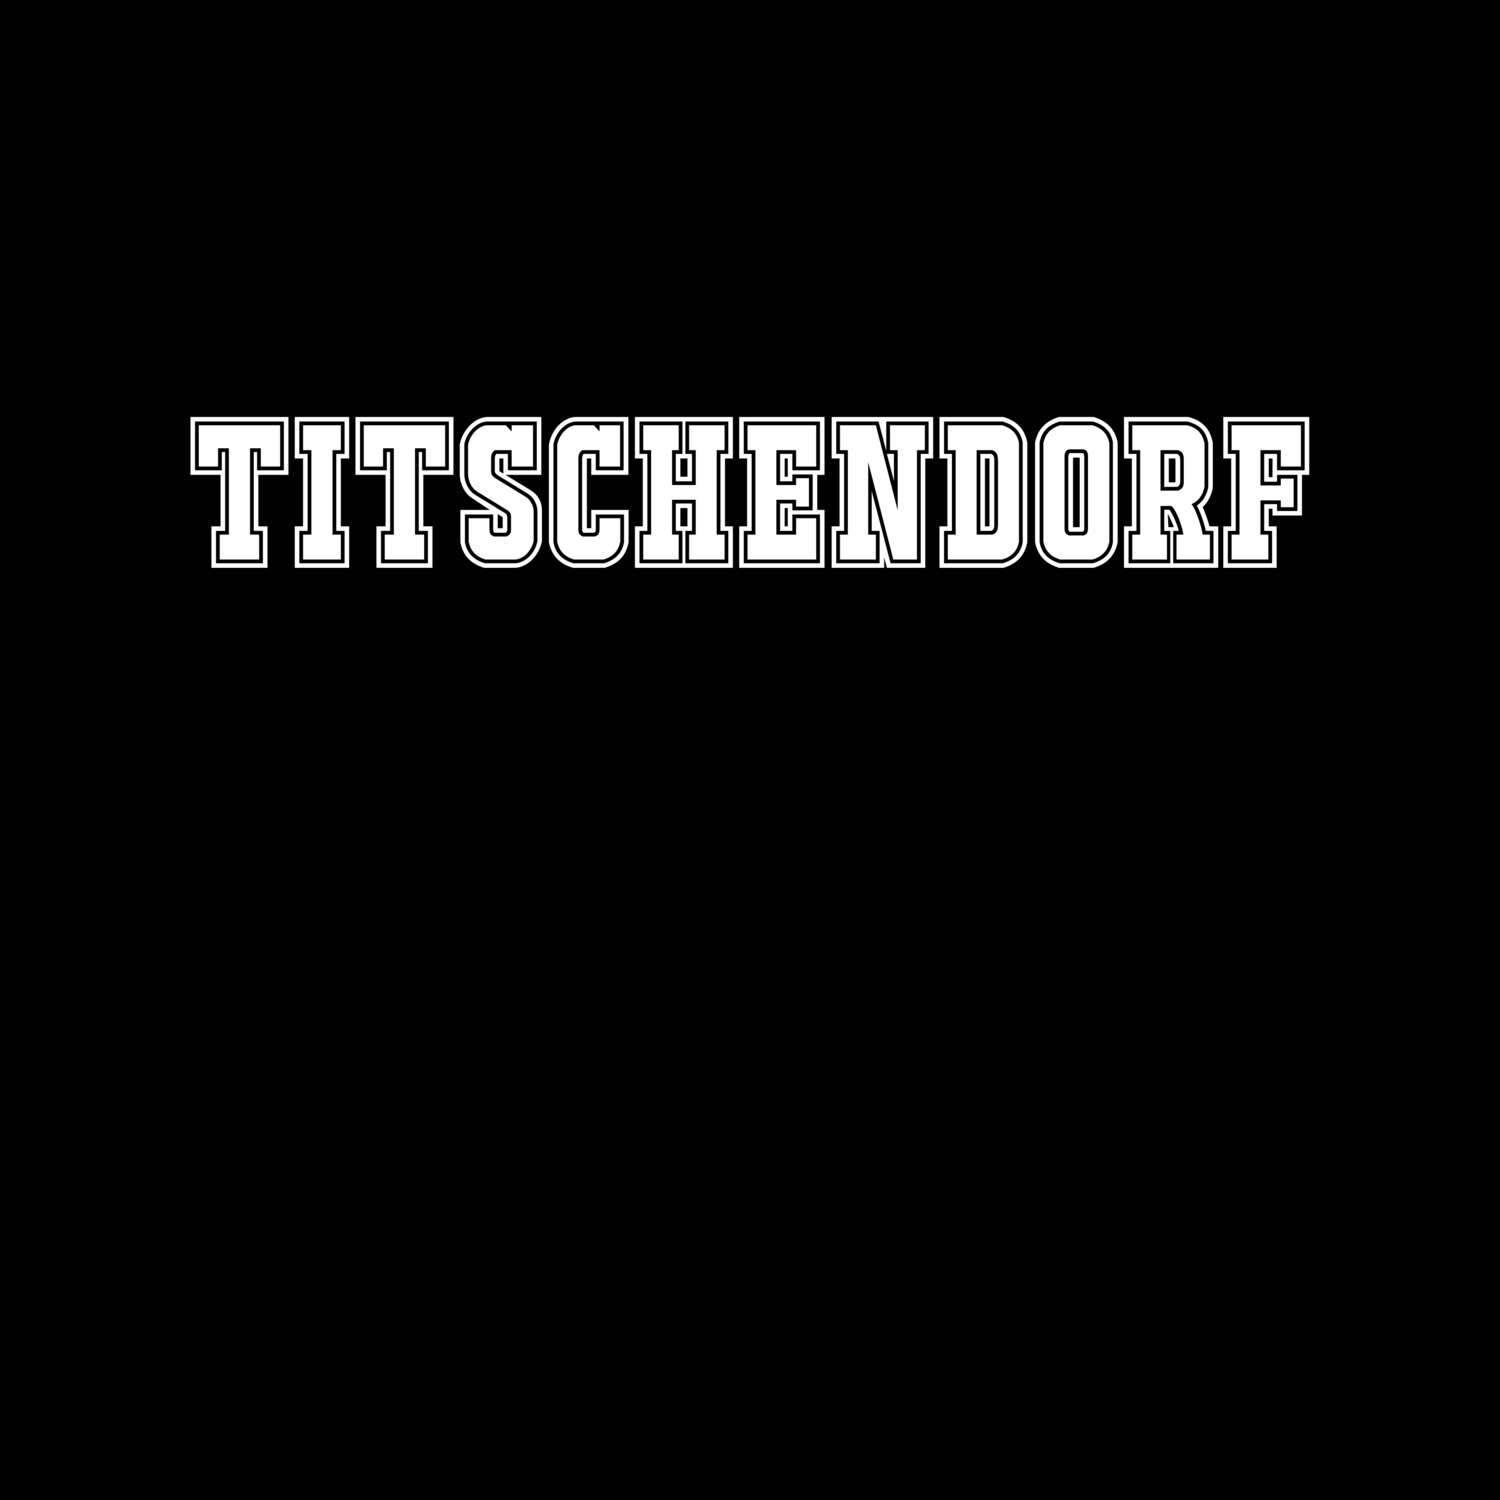 Titschendorf T-Shirt »Classic«